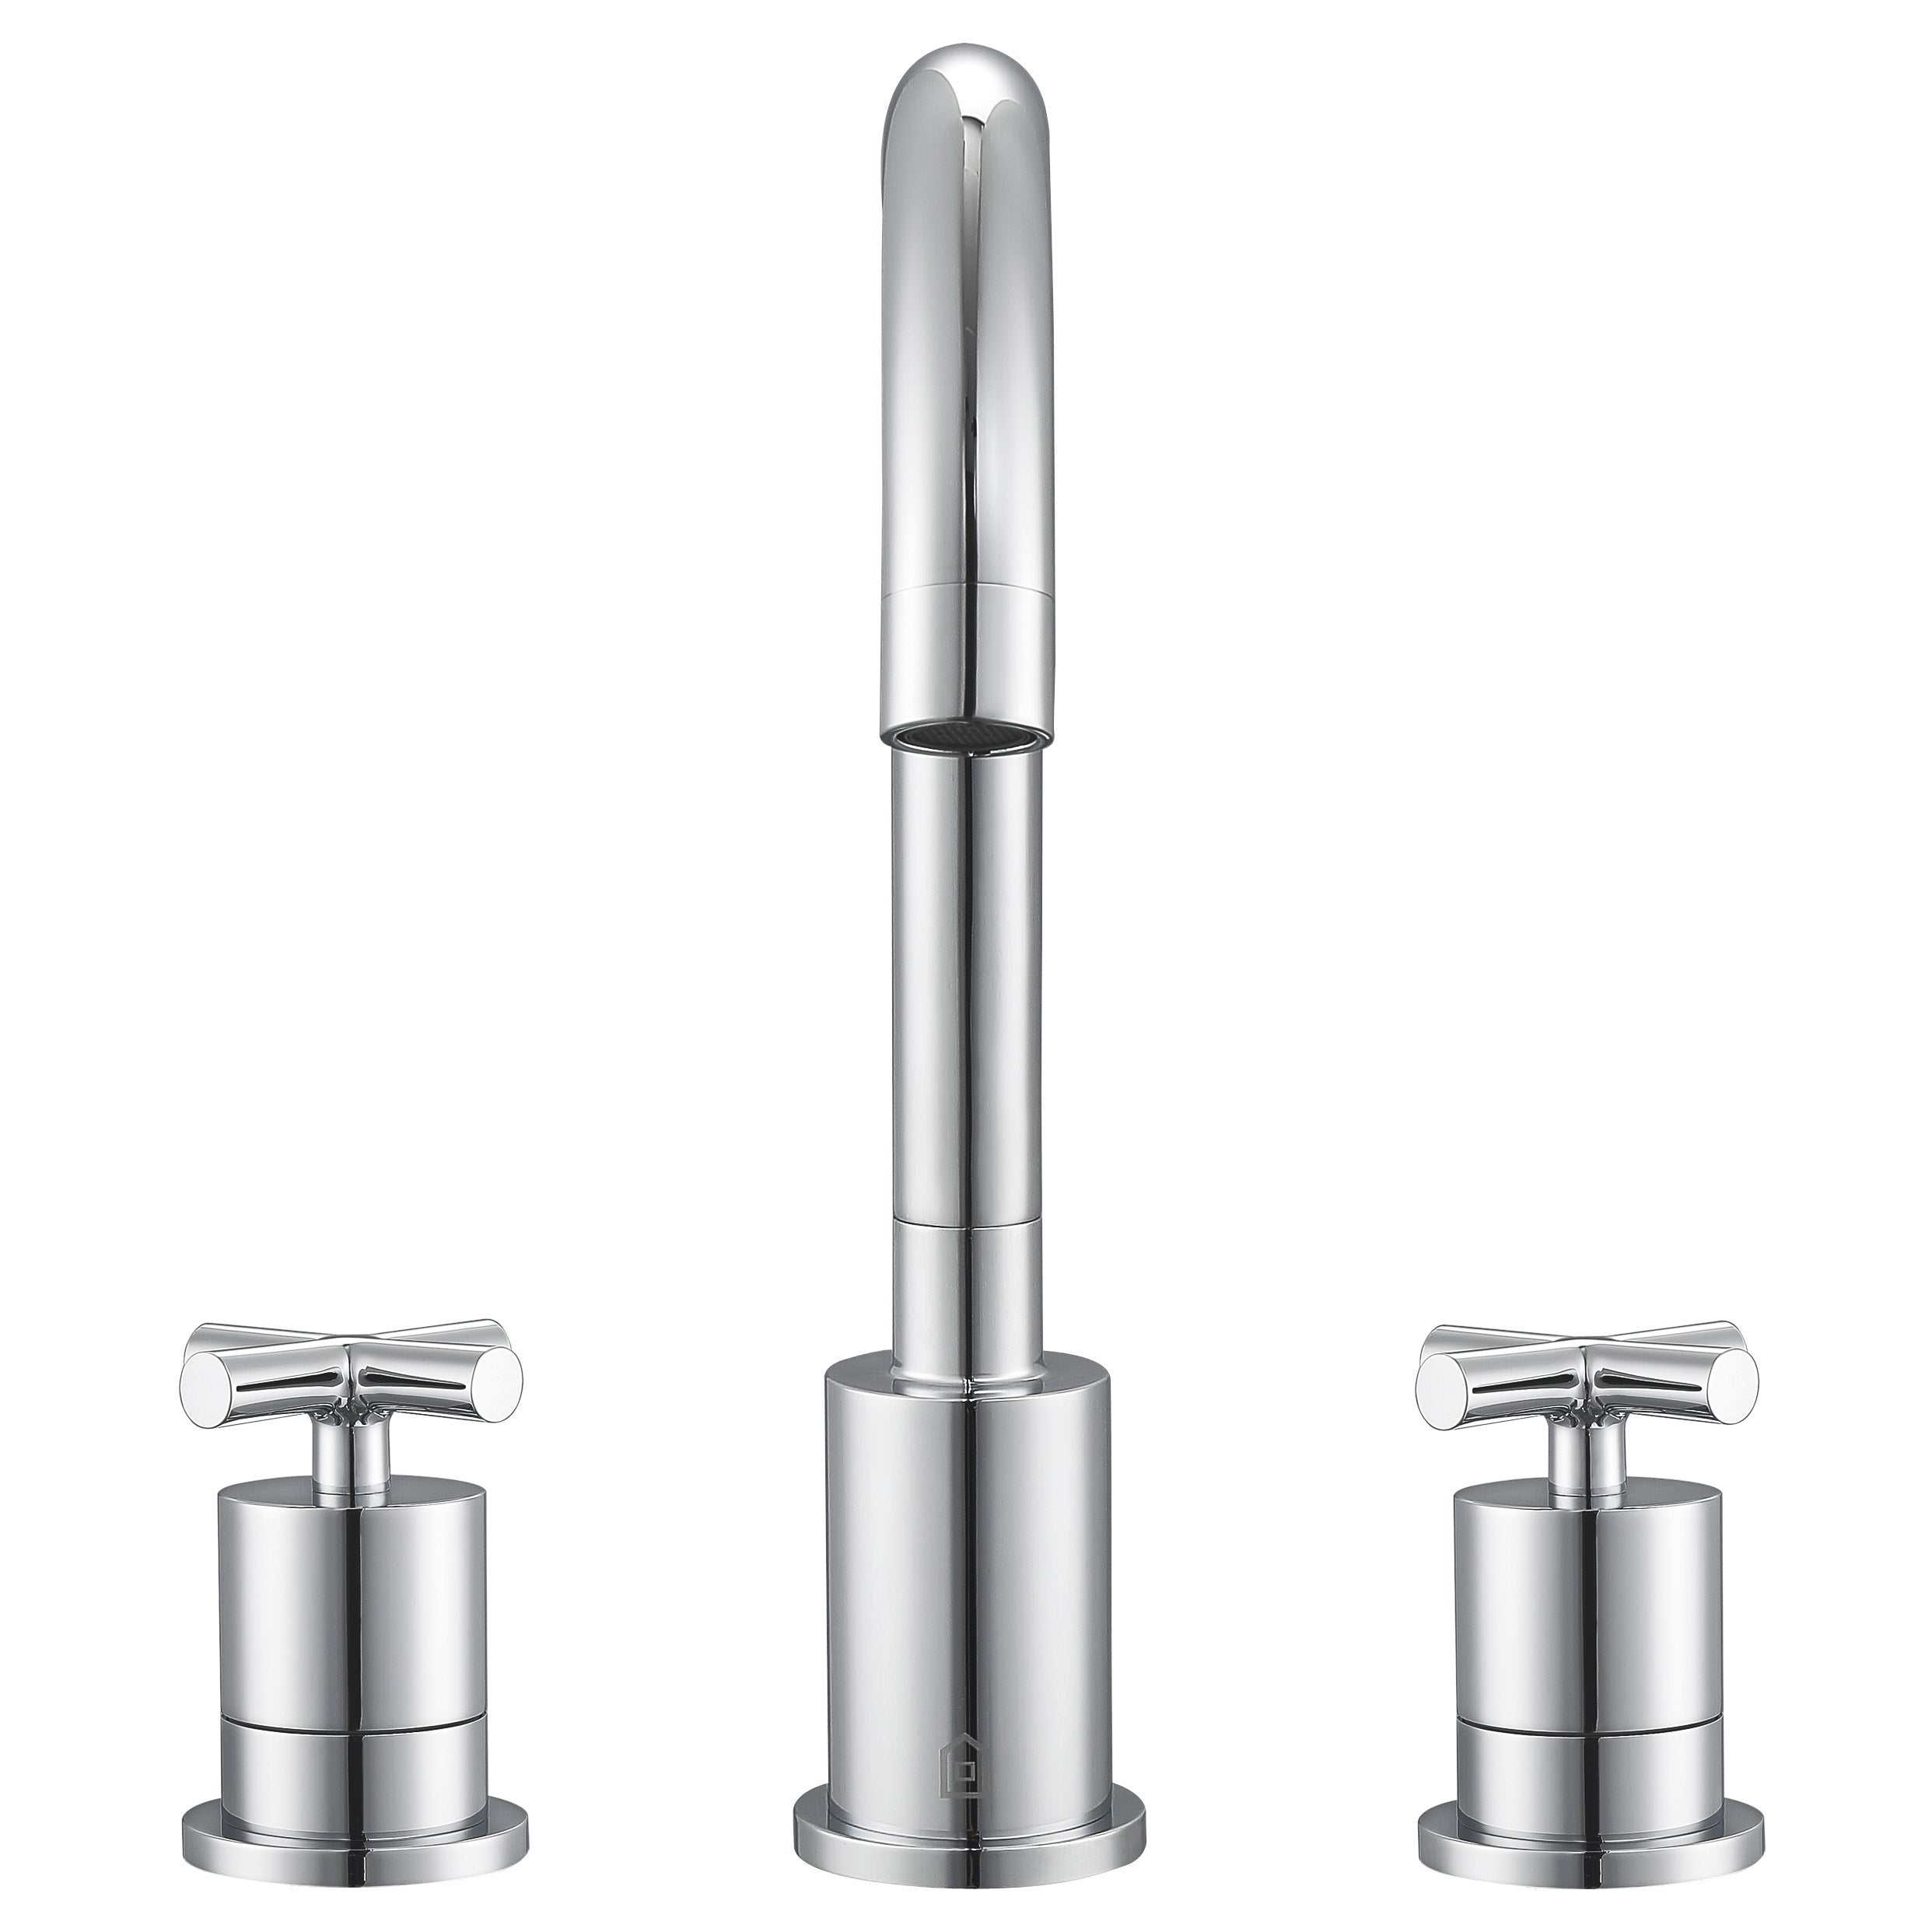 Ancona Ava Series Widespread Cross Handle Bathroom Faucet in Chrome